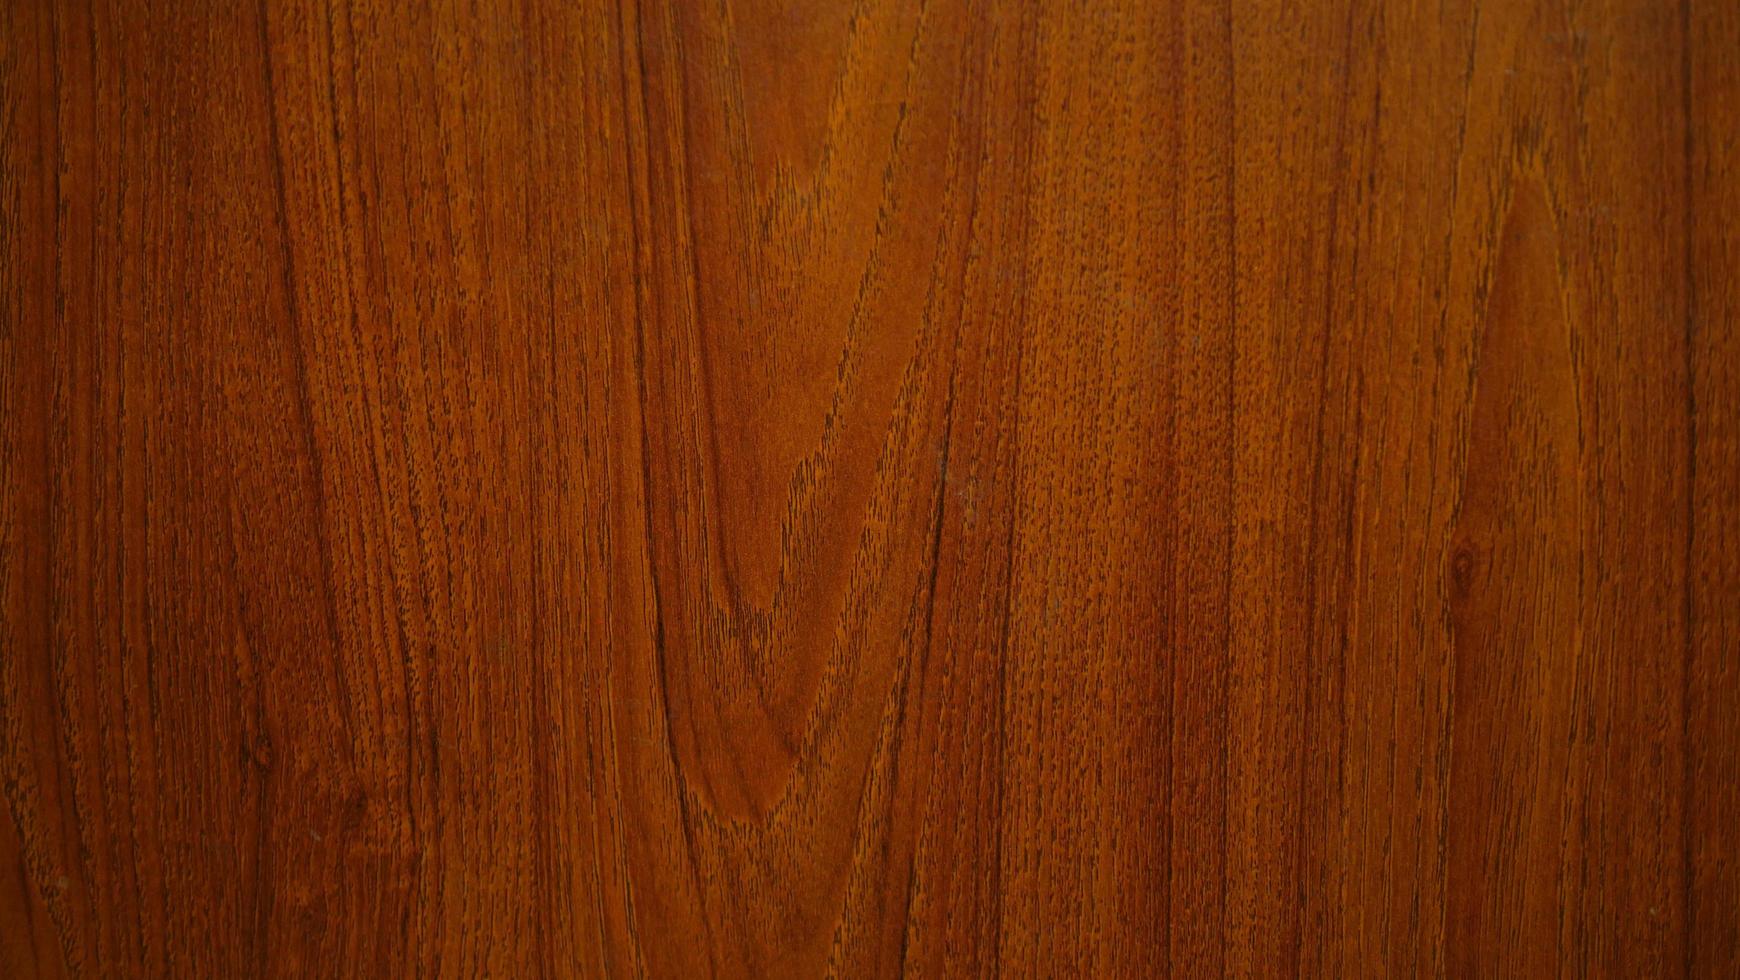 textura de grano de madera para hacer fondo o papel tapiz. patrón de grano de madera, tono rojo y negro. patrón de madera de teca roja. foto